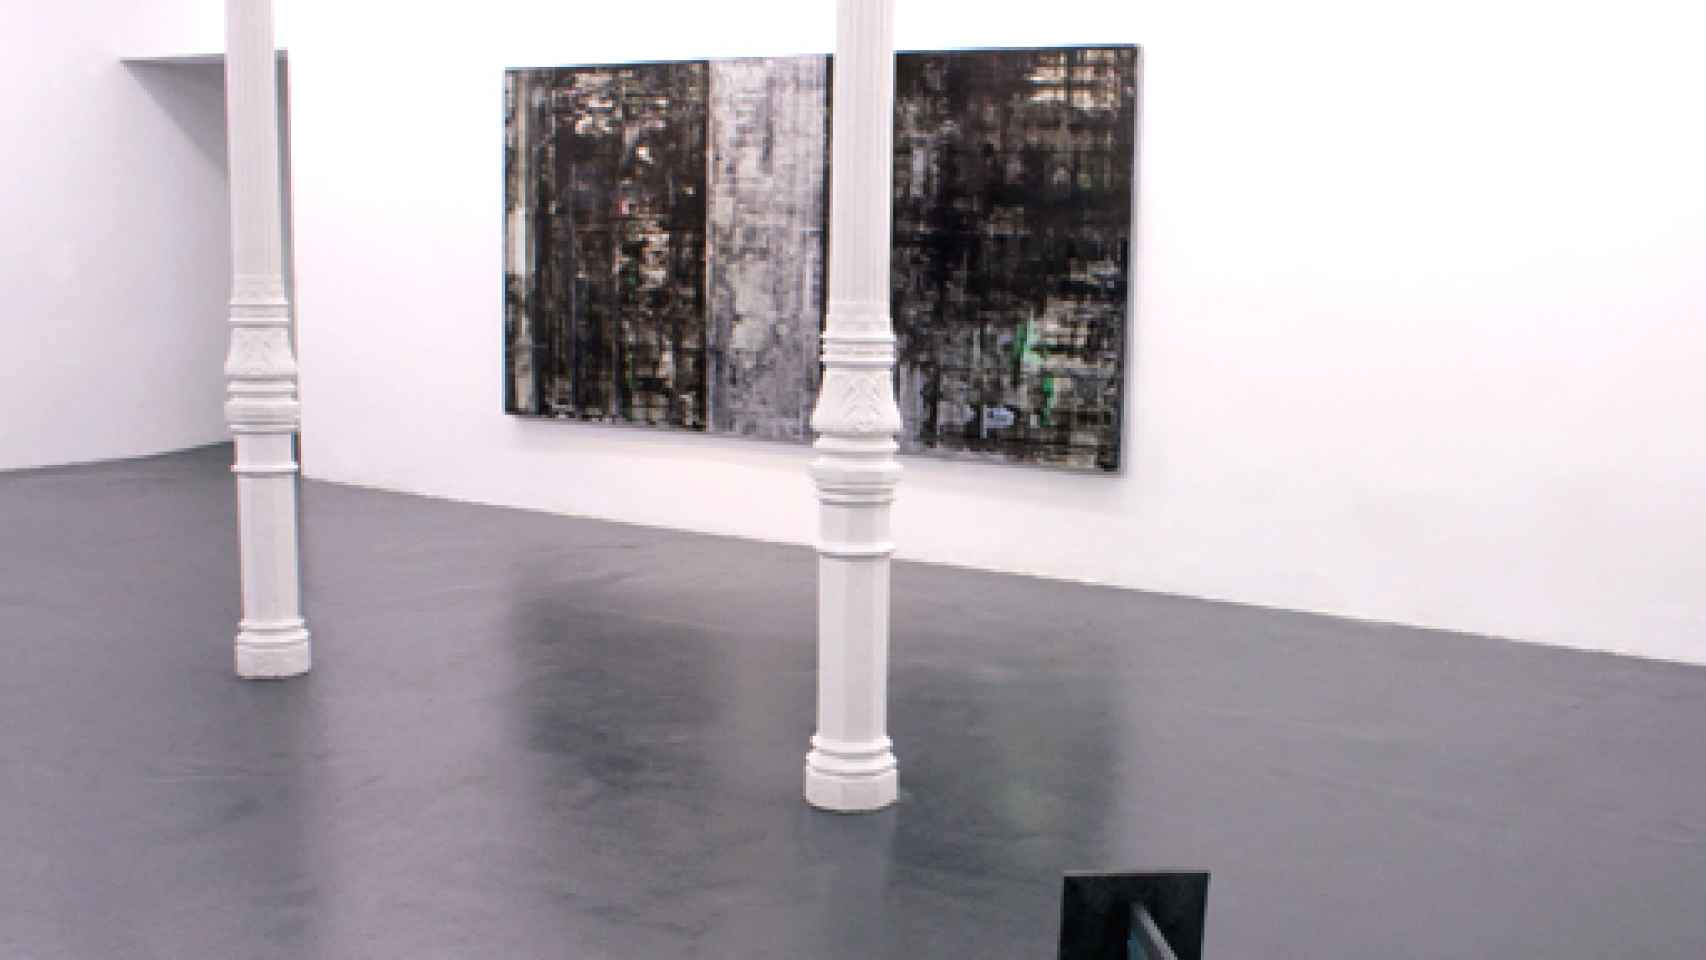 Image: Álvaro Negro, pintura del umbral